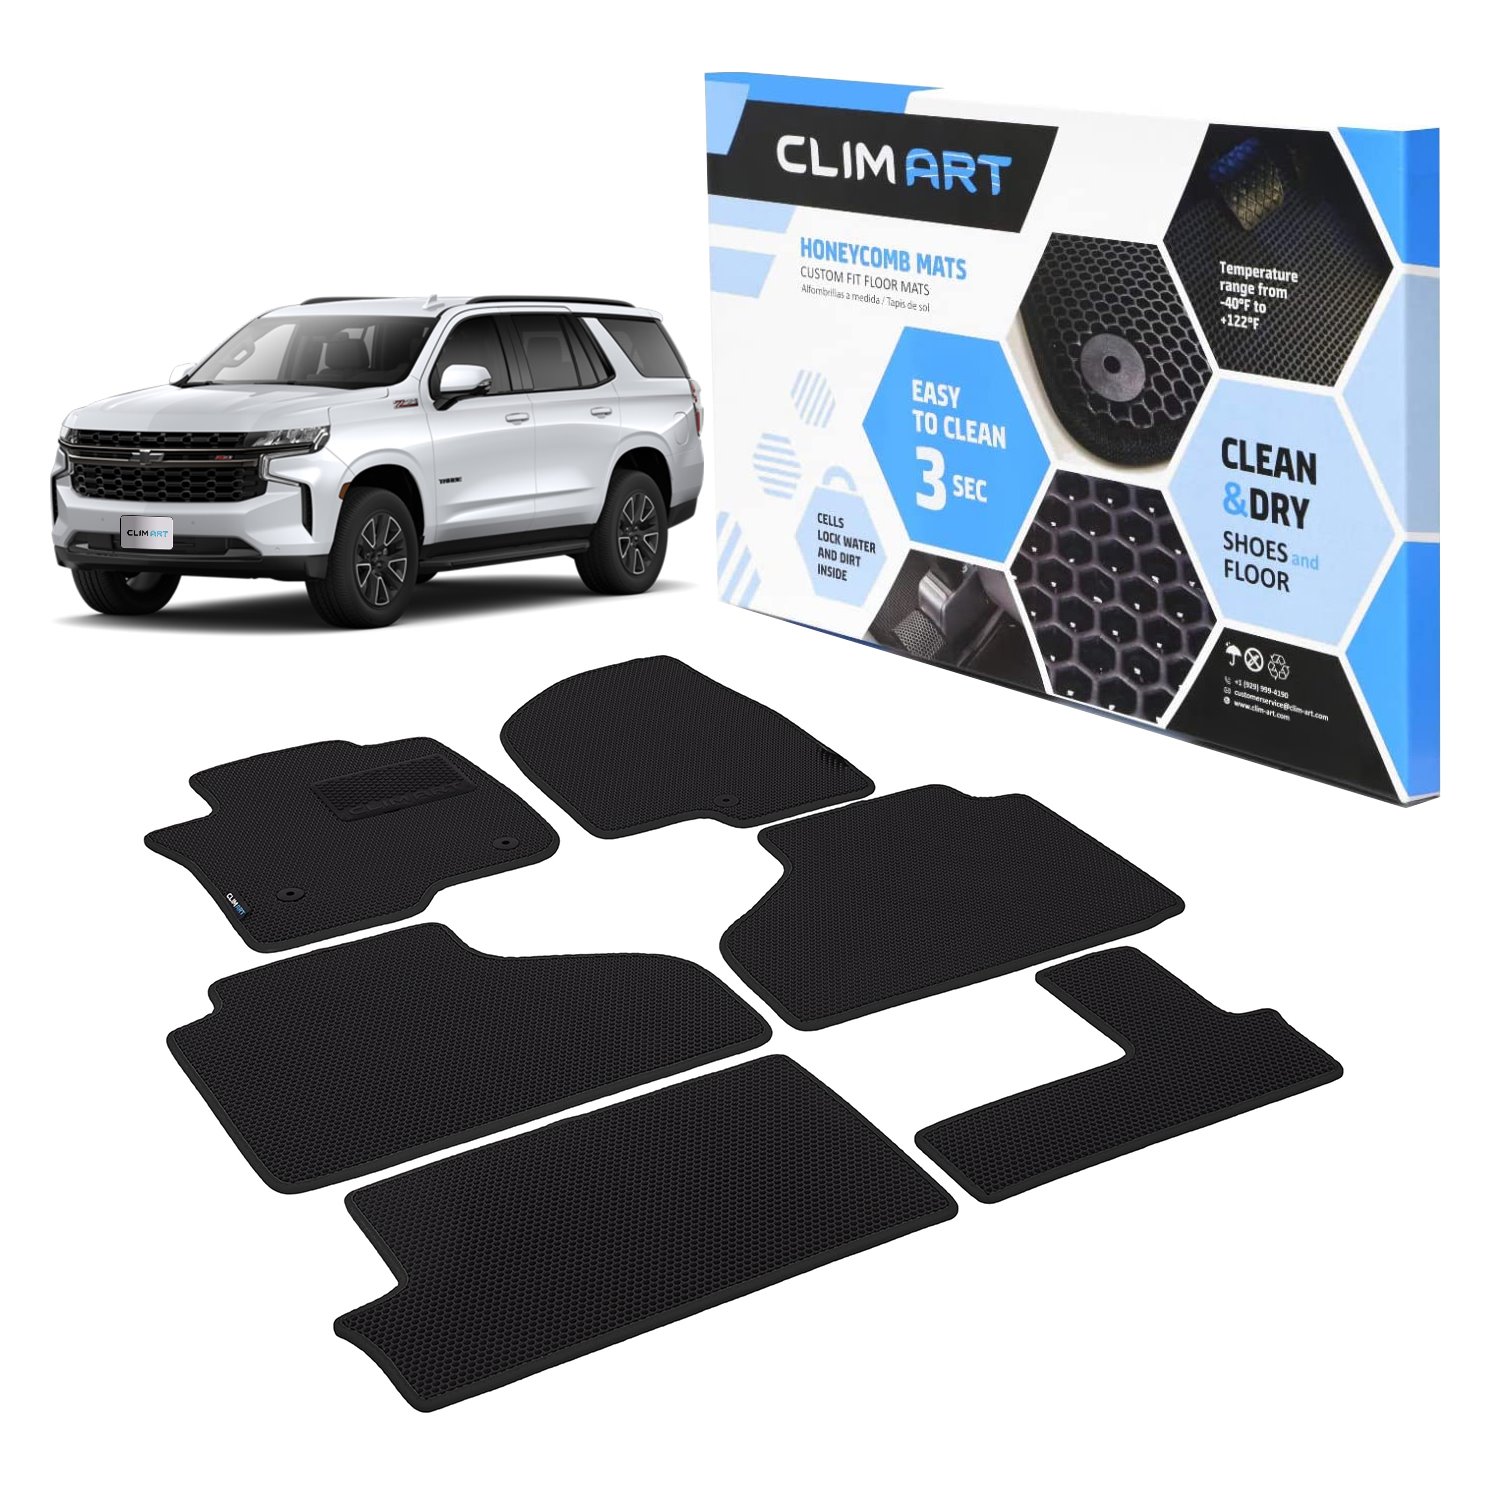 CLIM ART Honeycomb Custom Fit Floor Mats Fits Select Chevrolet Tahoe [Bench Seating]